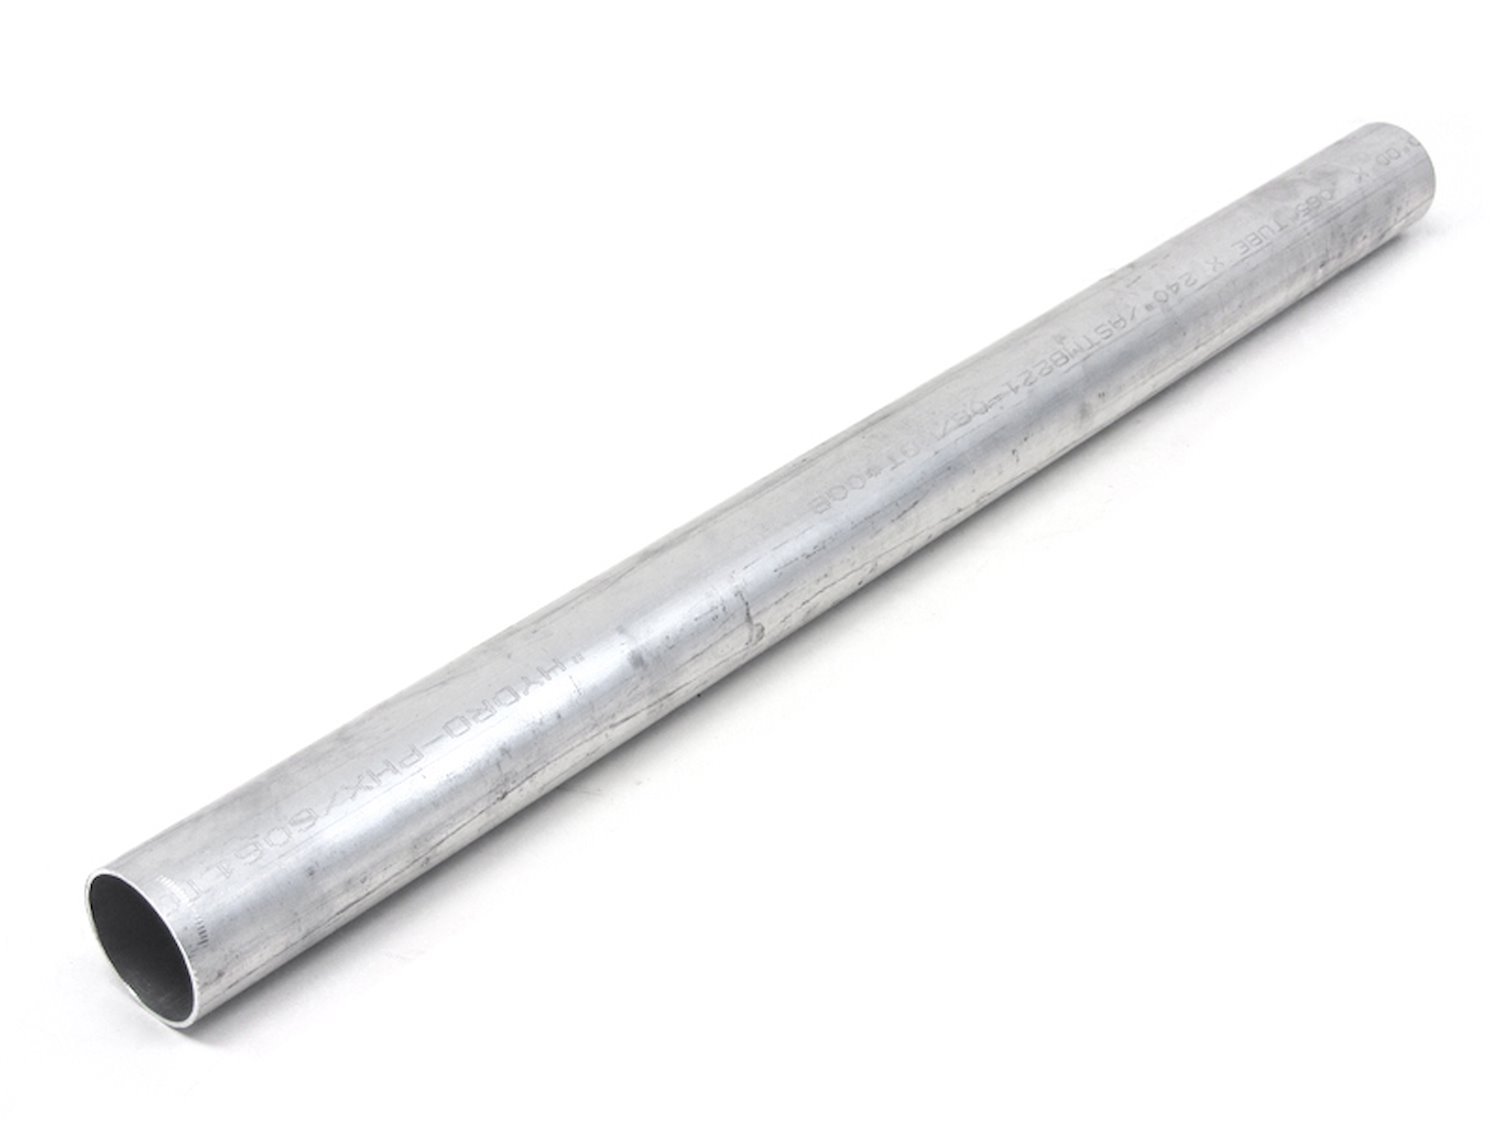 AST-225 Aluminum Tubing, 6061 Aluminum, Straight Tubing, 2-1/4 in. OD, Seamless, Raw Finish, 1 ft. Long